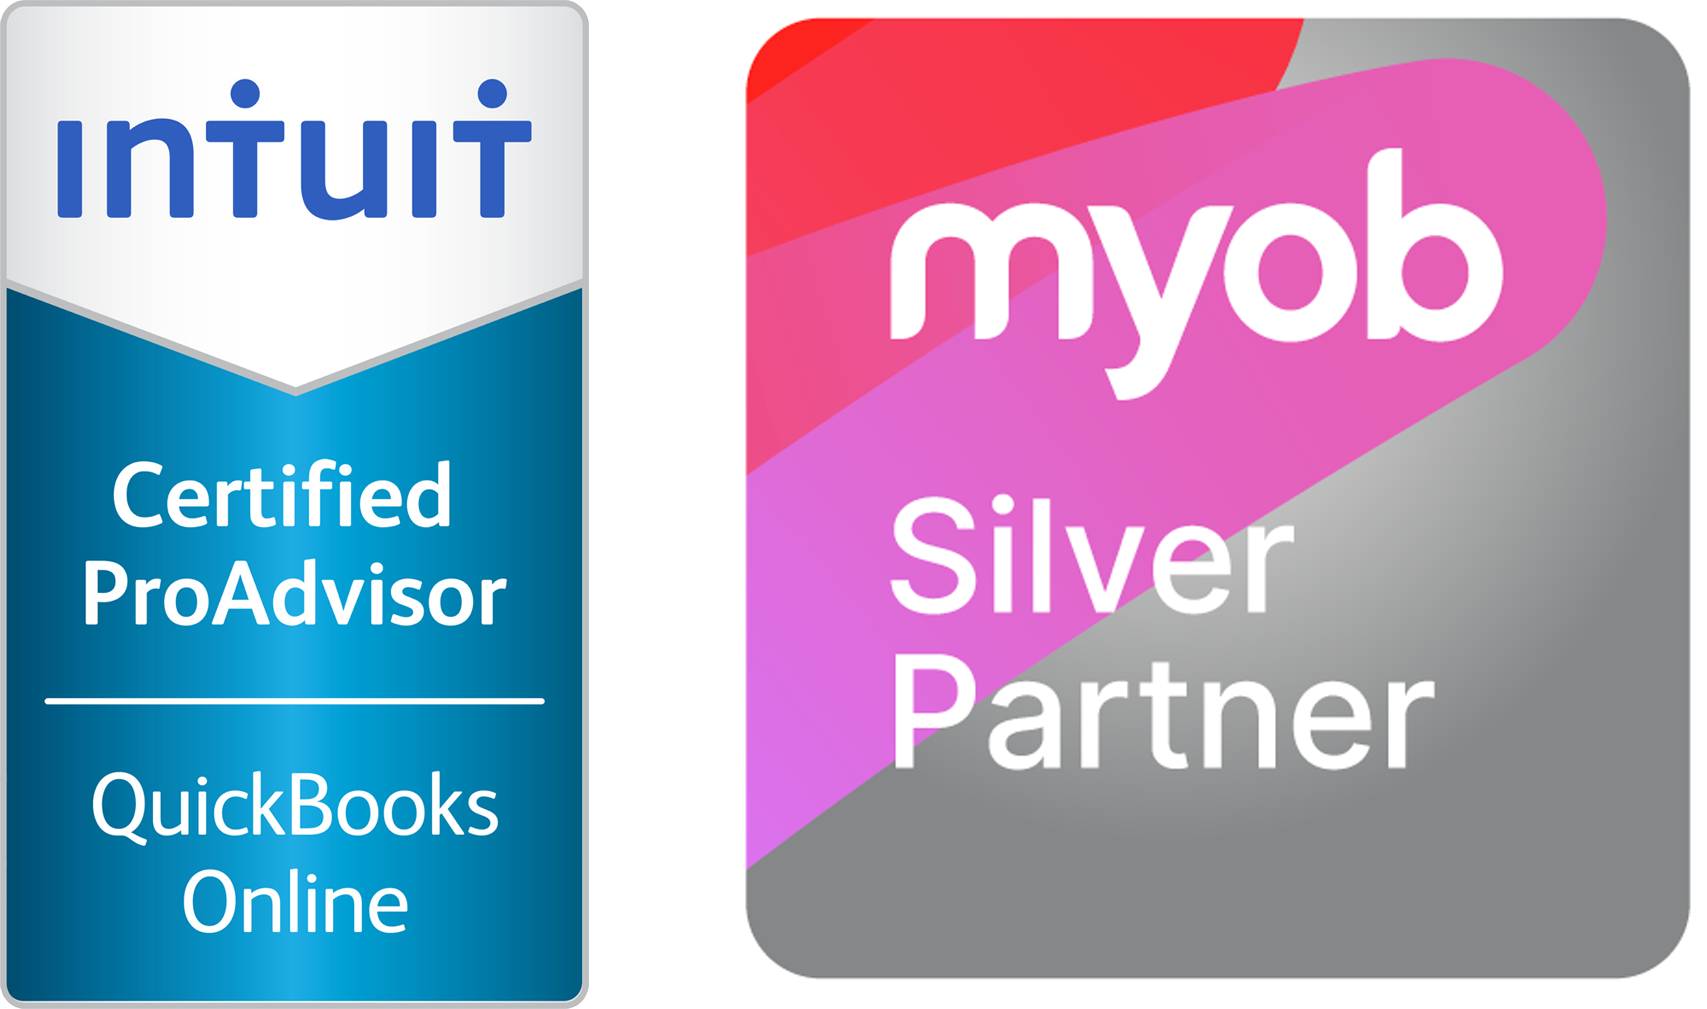 Logos for Intuit - Certified ProAdvisor, QuickBooks online and MYOB, silver partner.